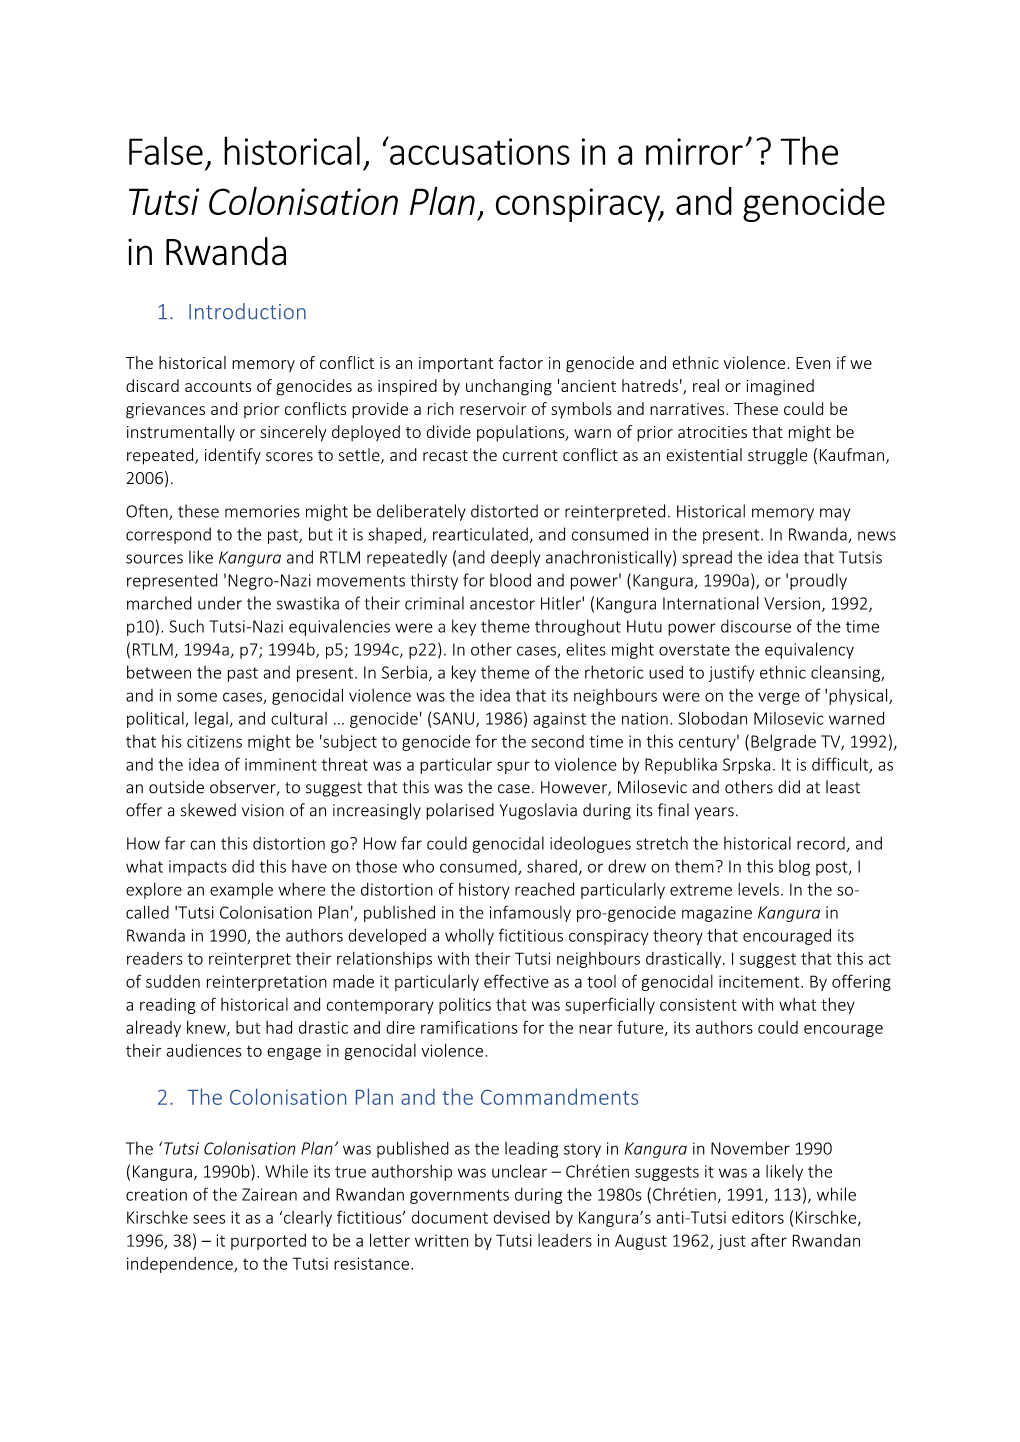 The Tutsi Colonisation Plan, Conspiracy, and Genocide in Rwanda